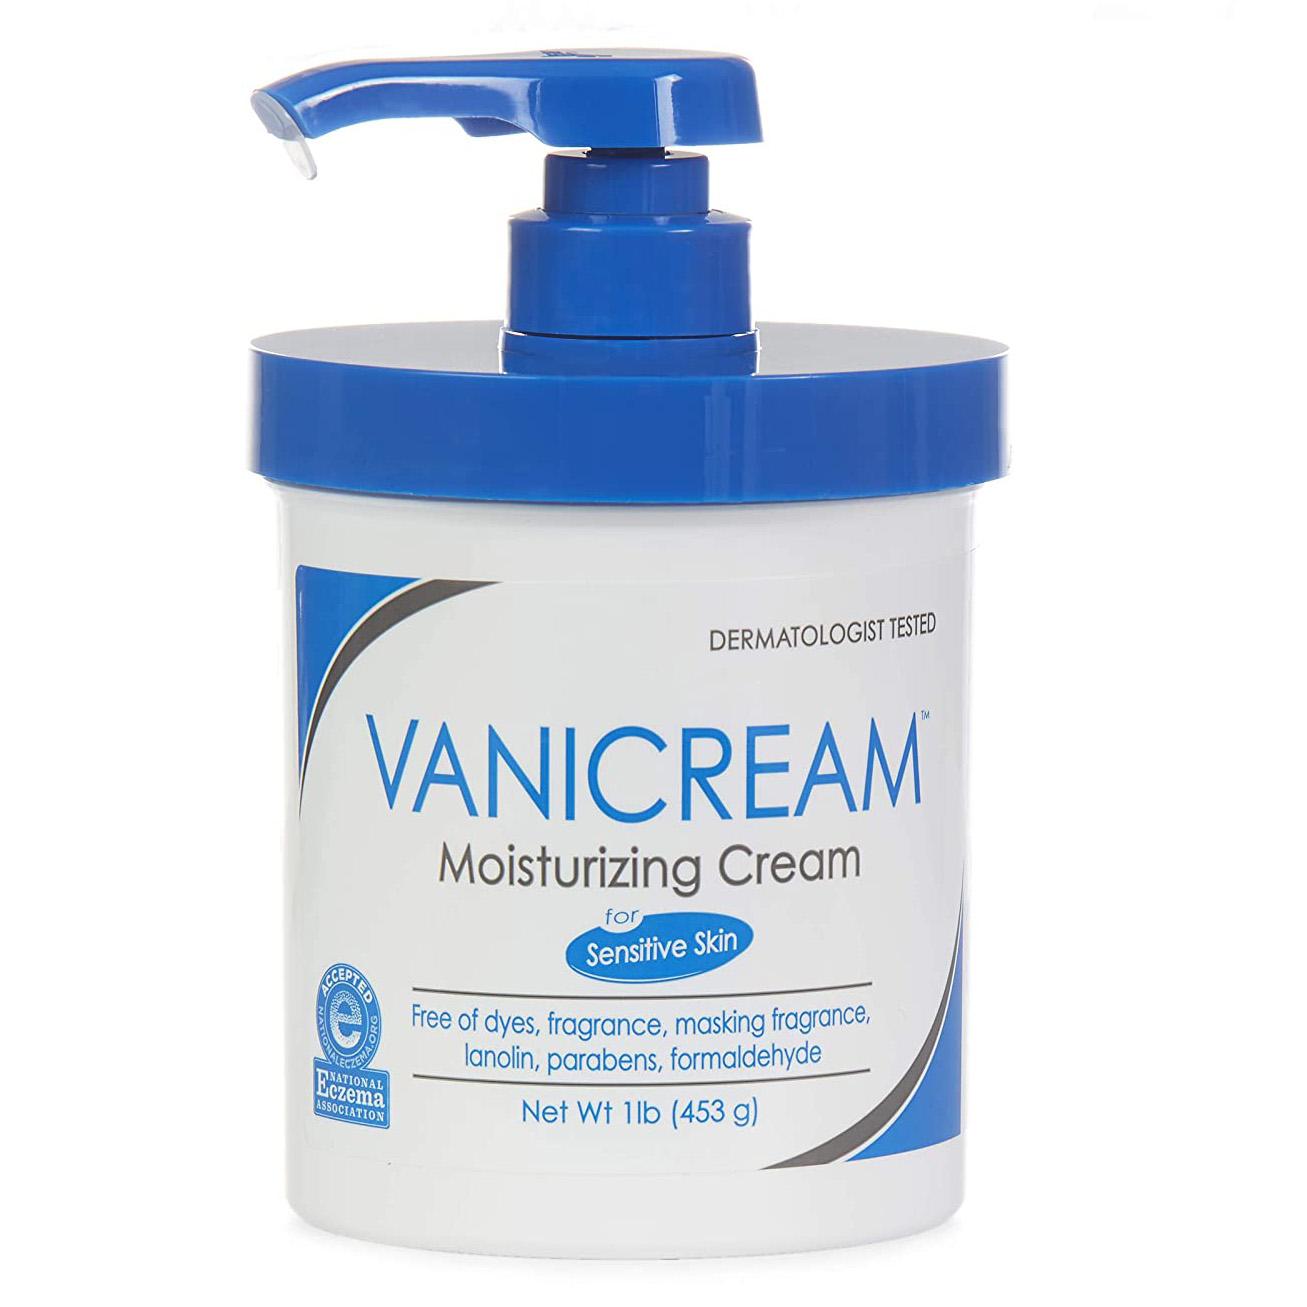 Vanicream Moisturizing Skin Cream with Pump for $8.44 Shipped